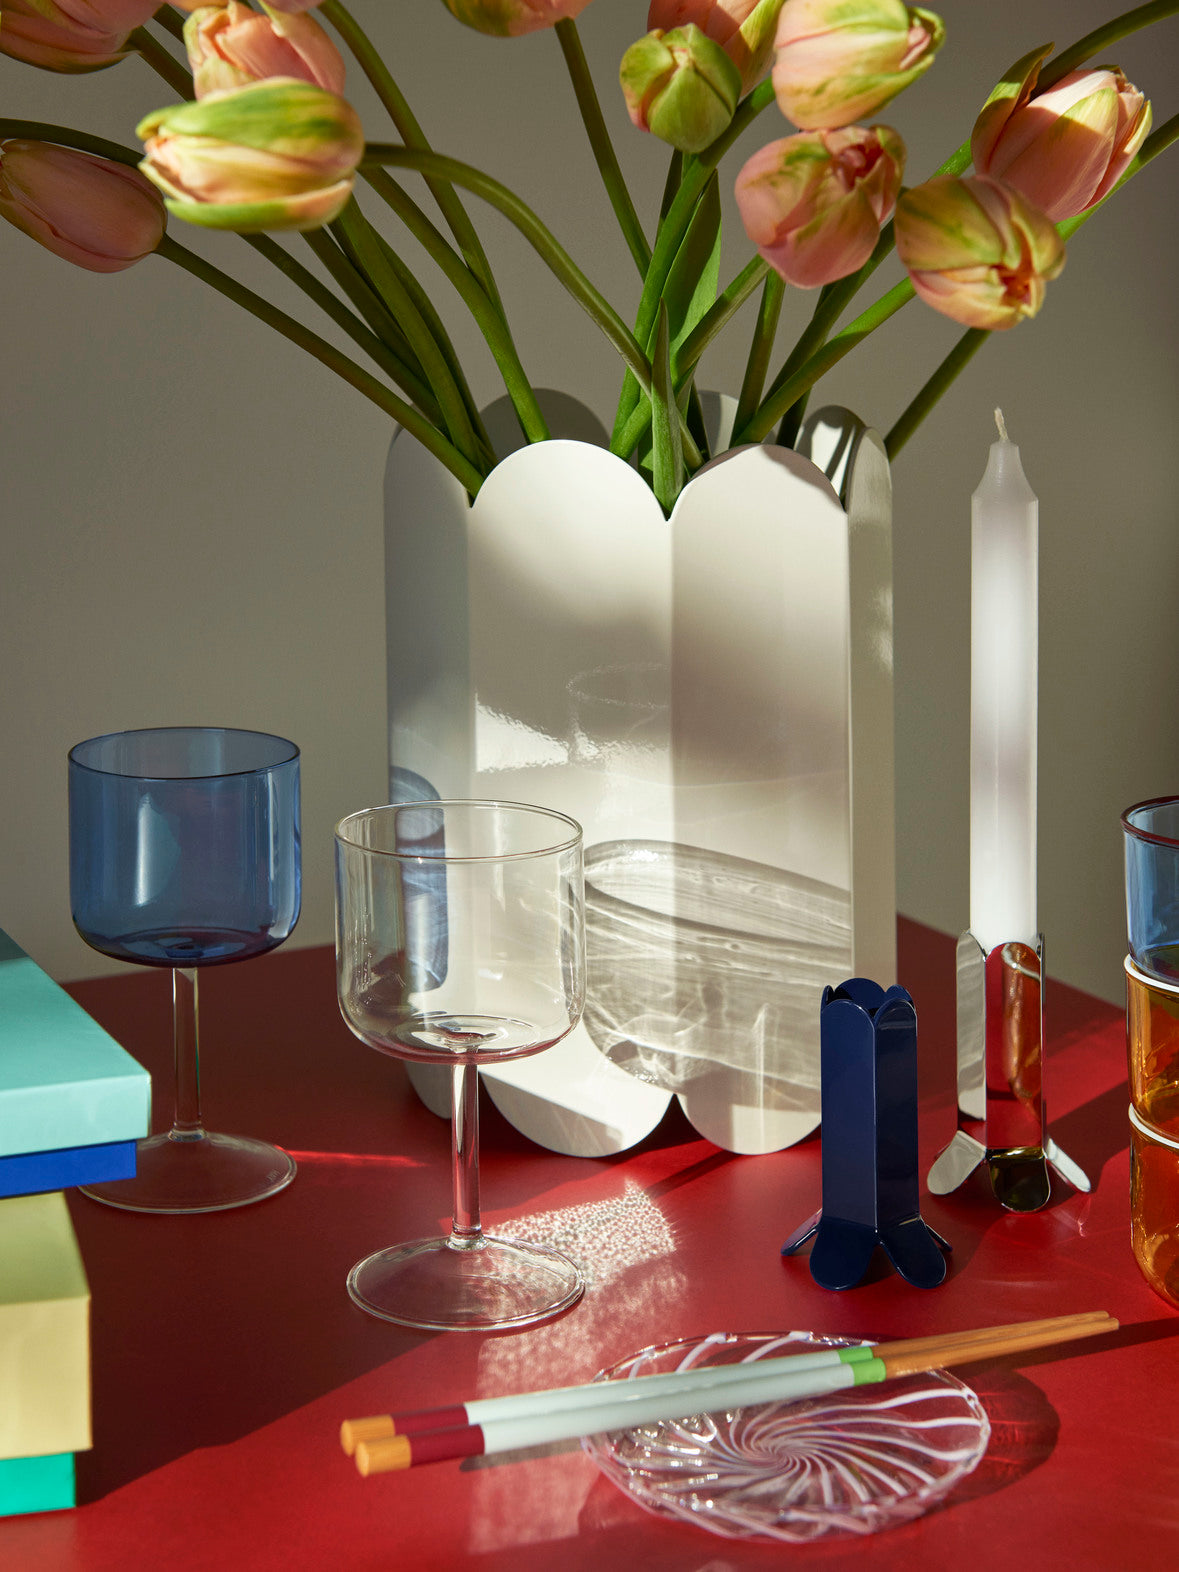 Copas Tint Wine Glass Set de 2 - transparentes